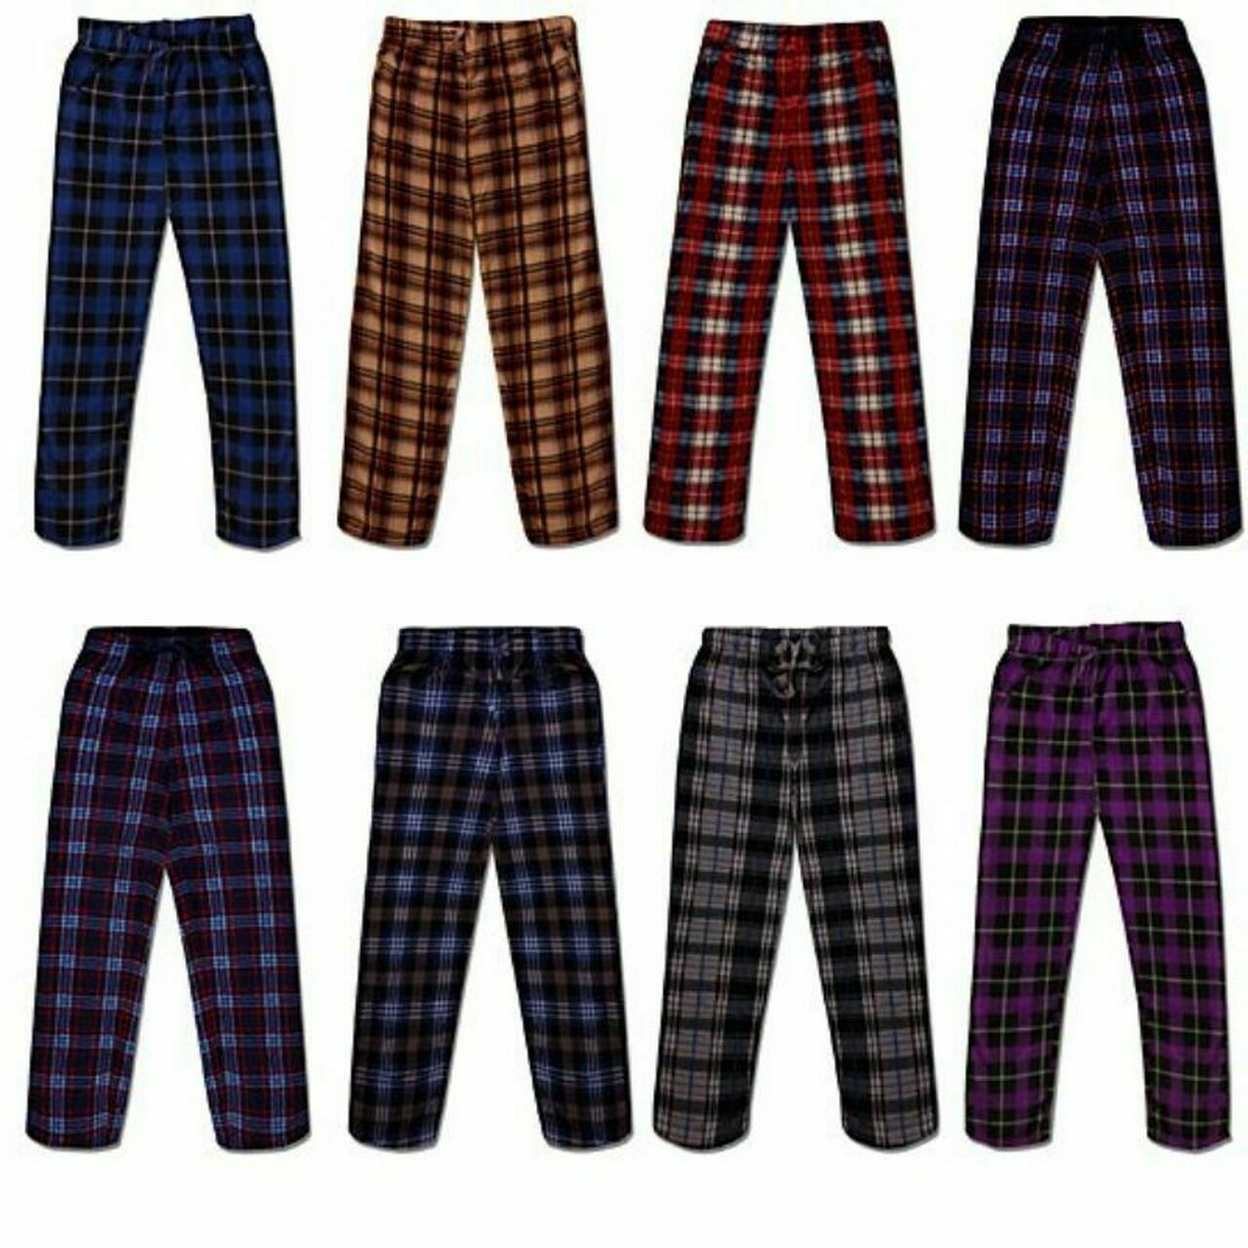 2-Pack: Men's Ultra Soft Cozy Flannel Fleece Plaid Pajama Sleep Bottom Lounge Pants - Red & Grey, Medium